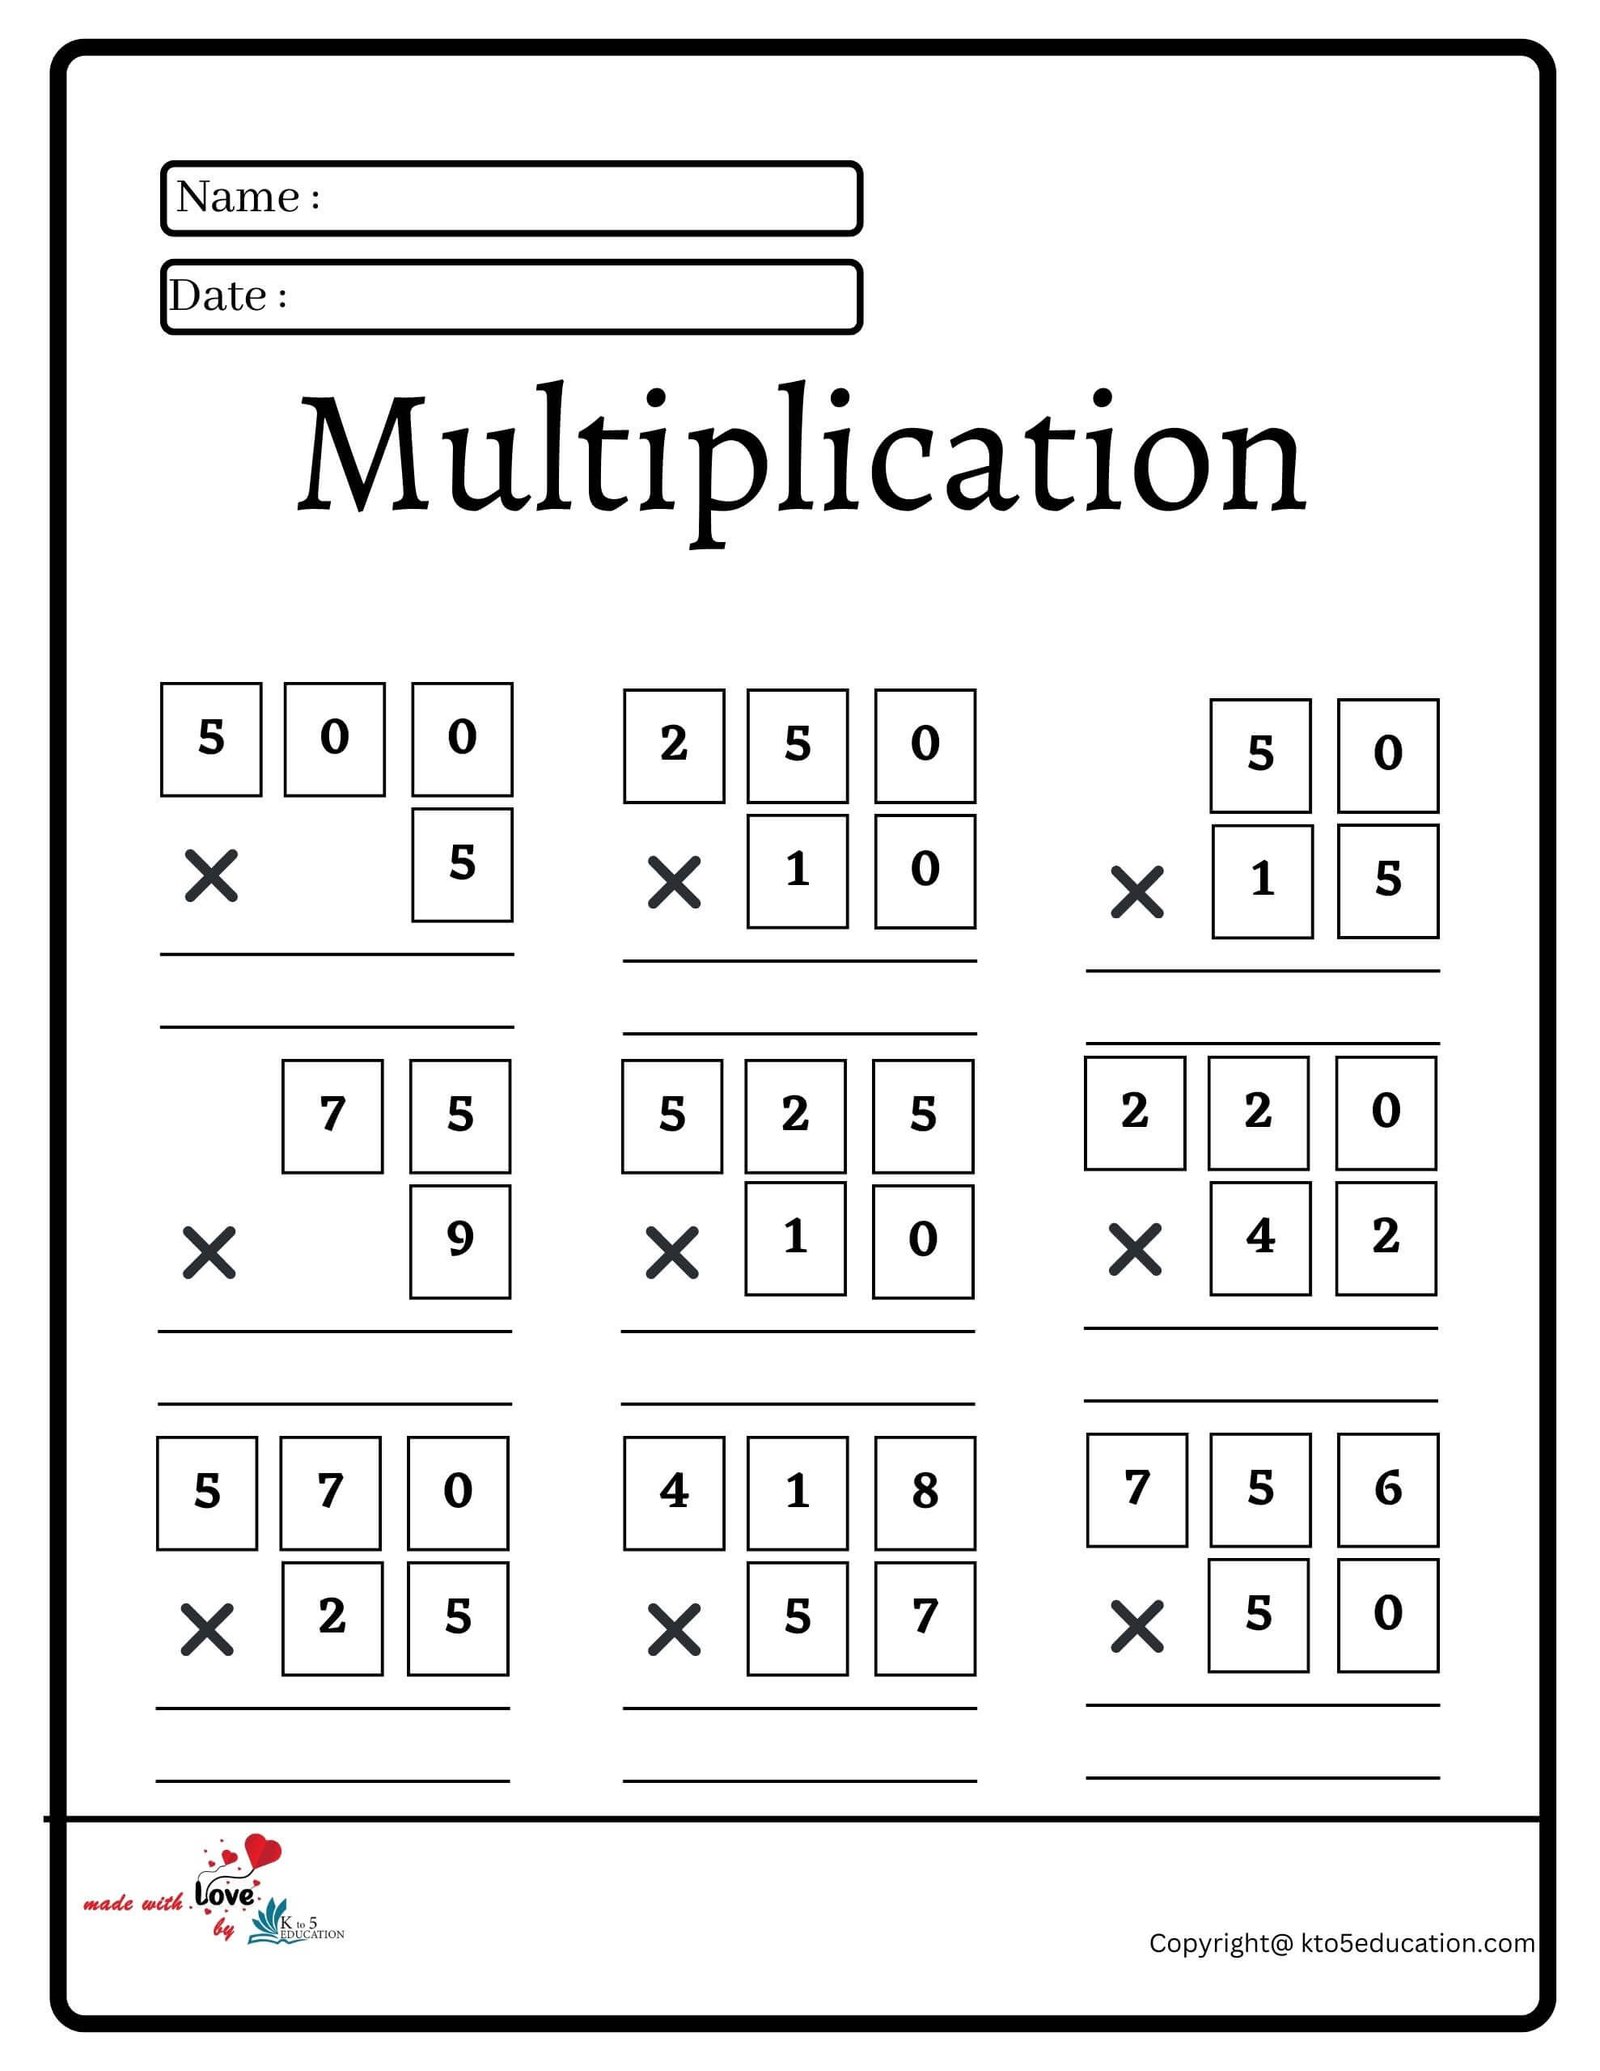 Multiplication Worksheet 2